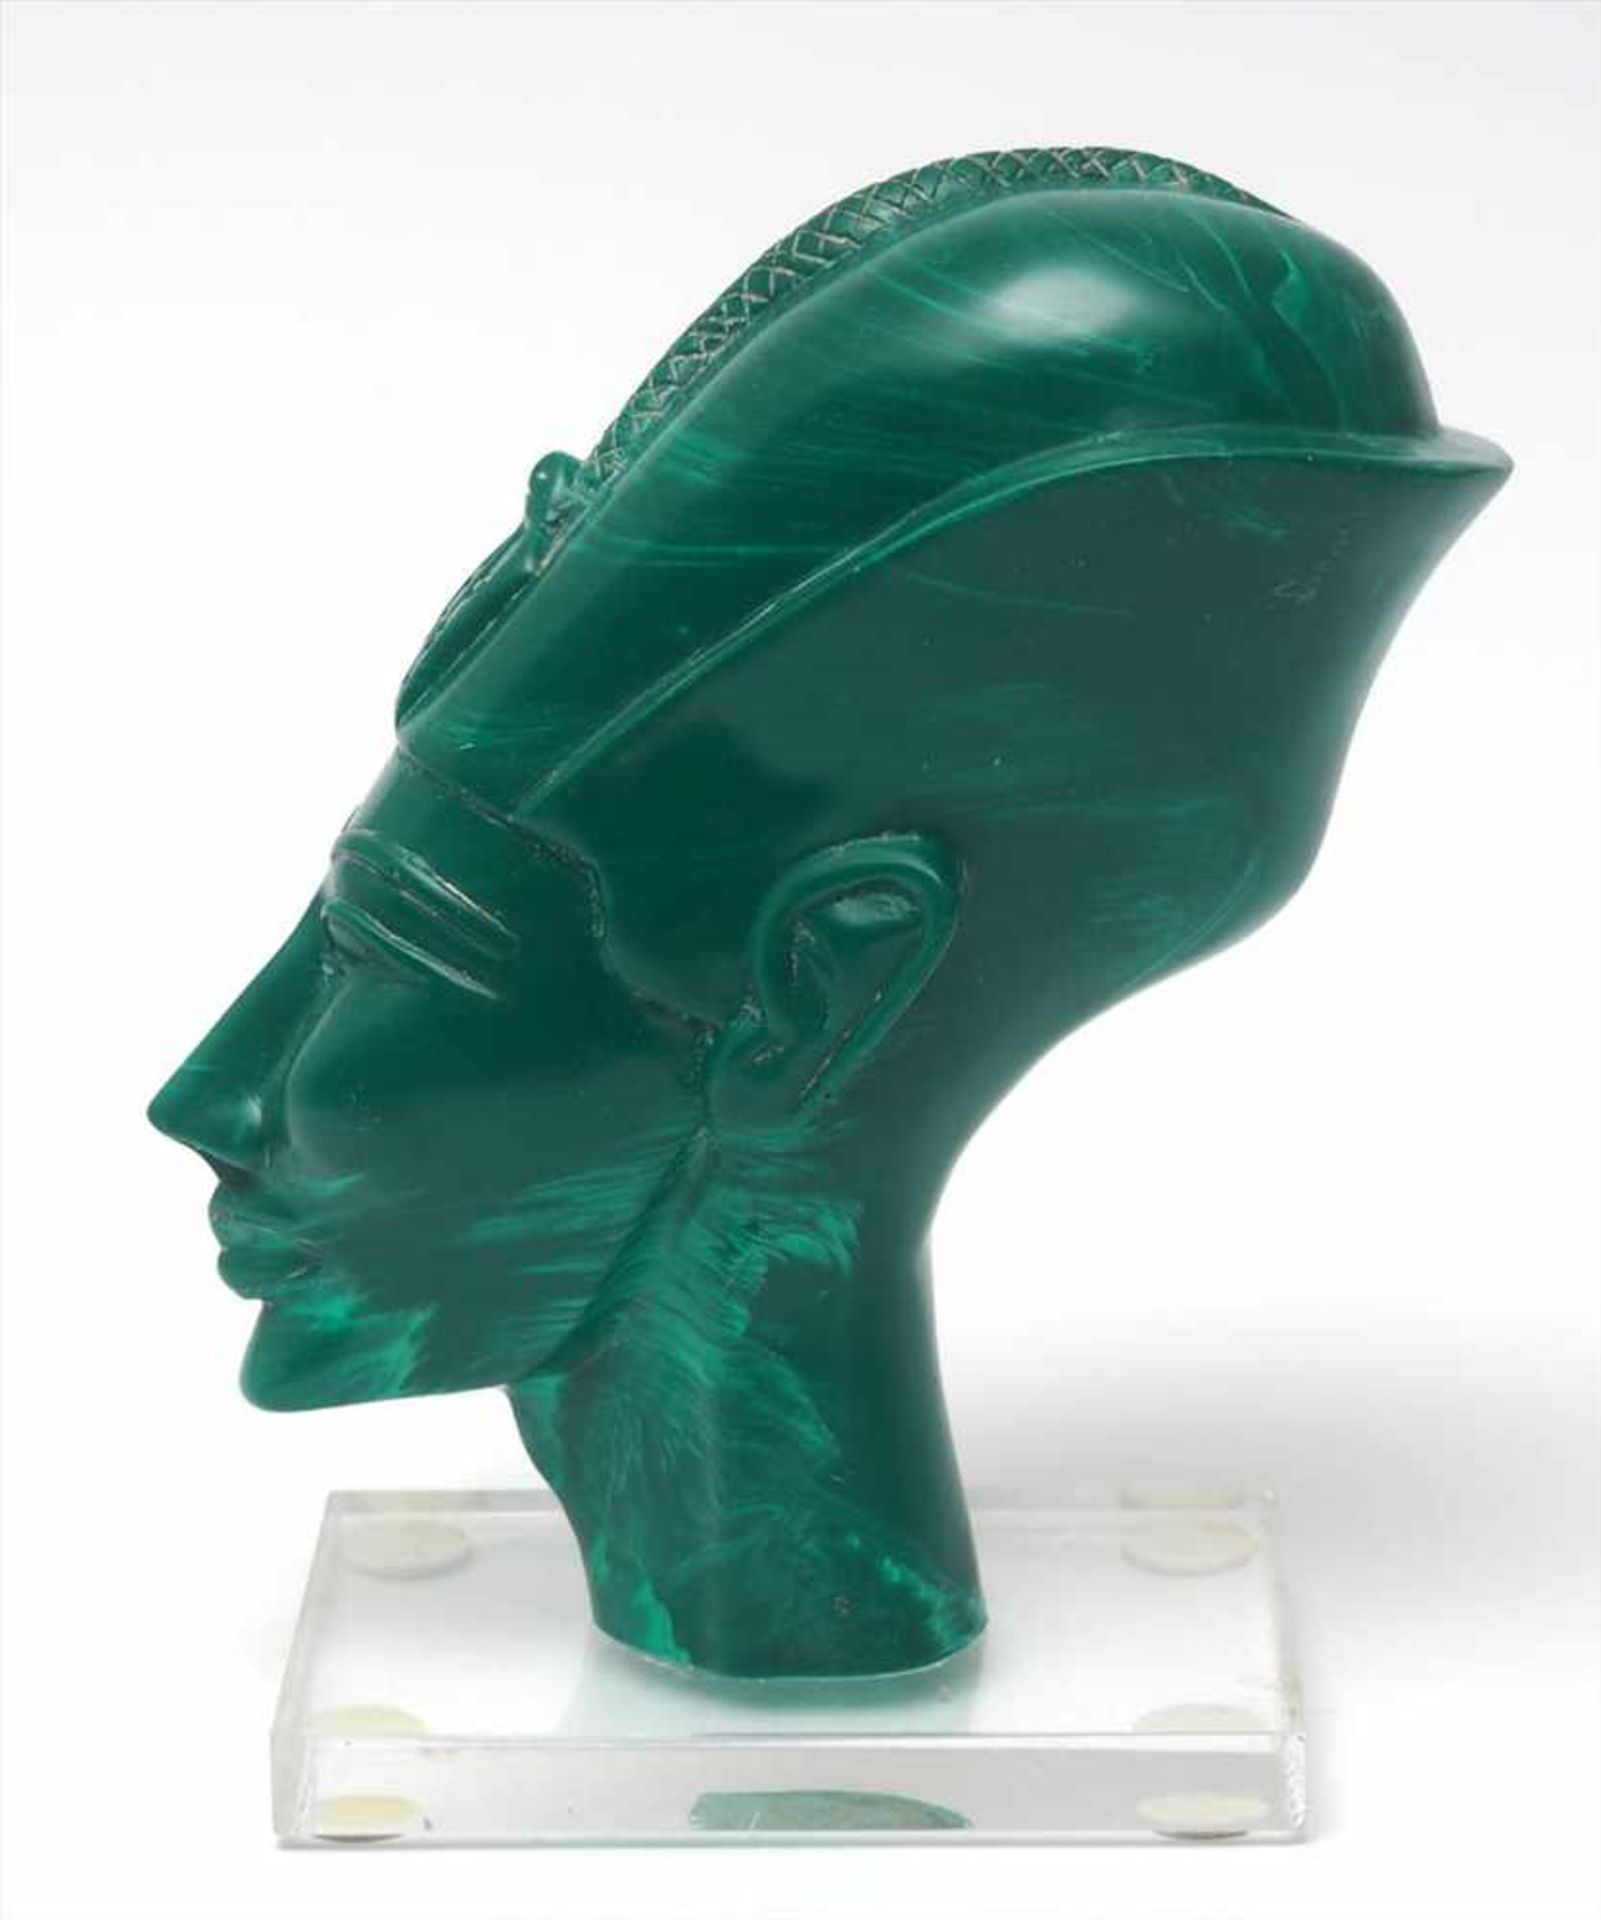 MuseumsreplikPortraitkopf des Pharaos Echnaton. Auf Acrylglassockel. H.24cm. - Image 2 of 3